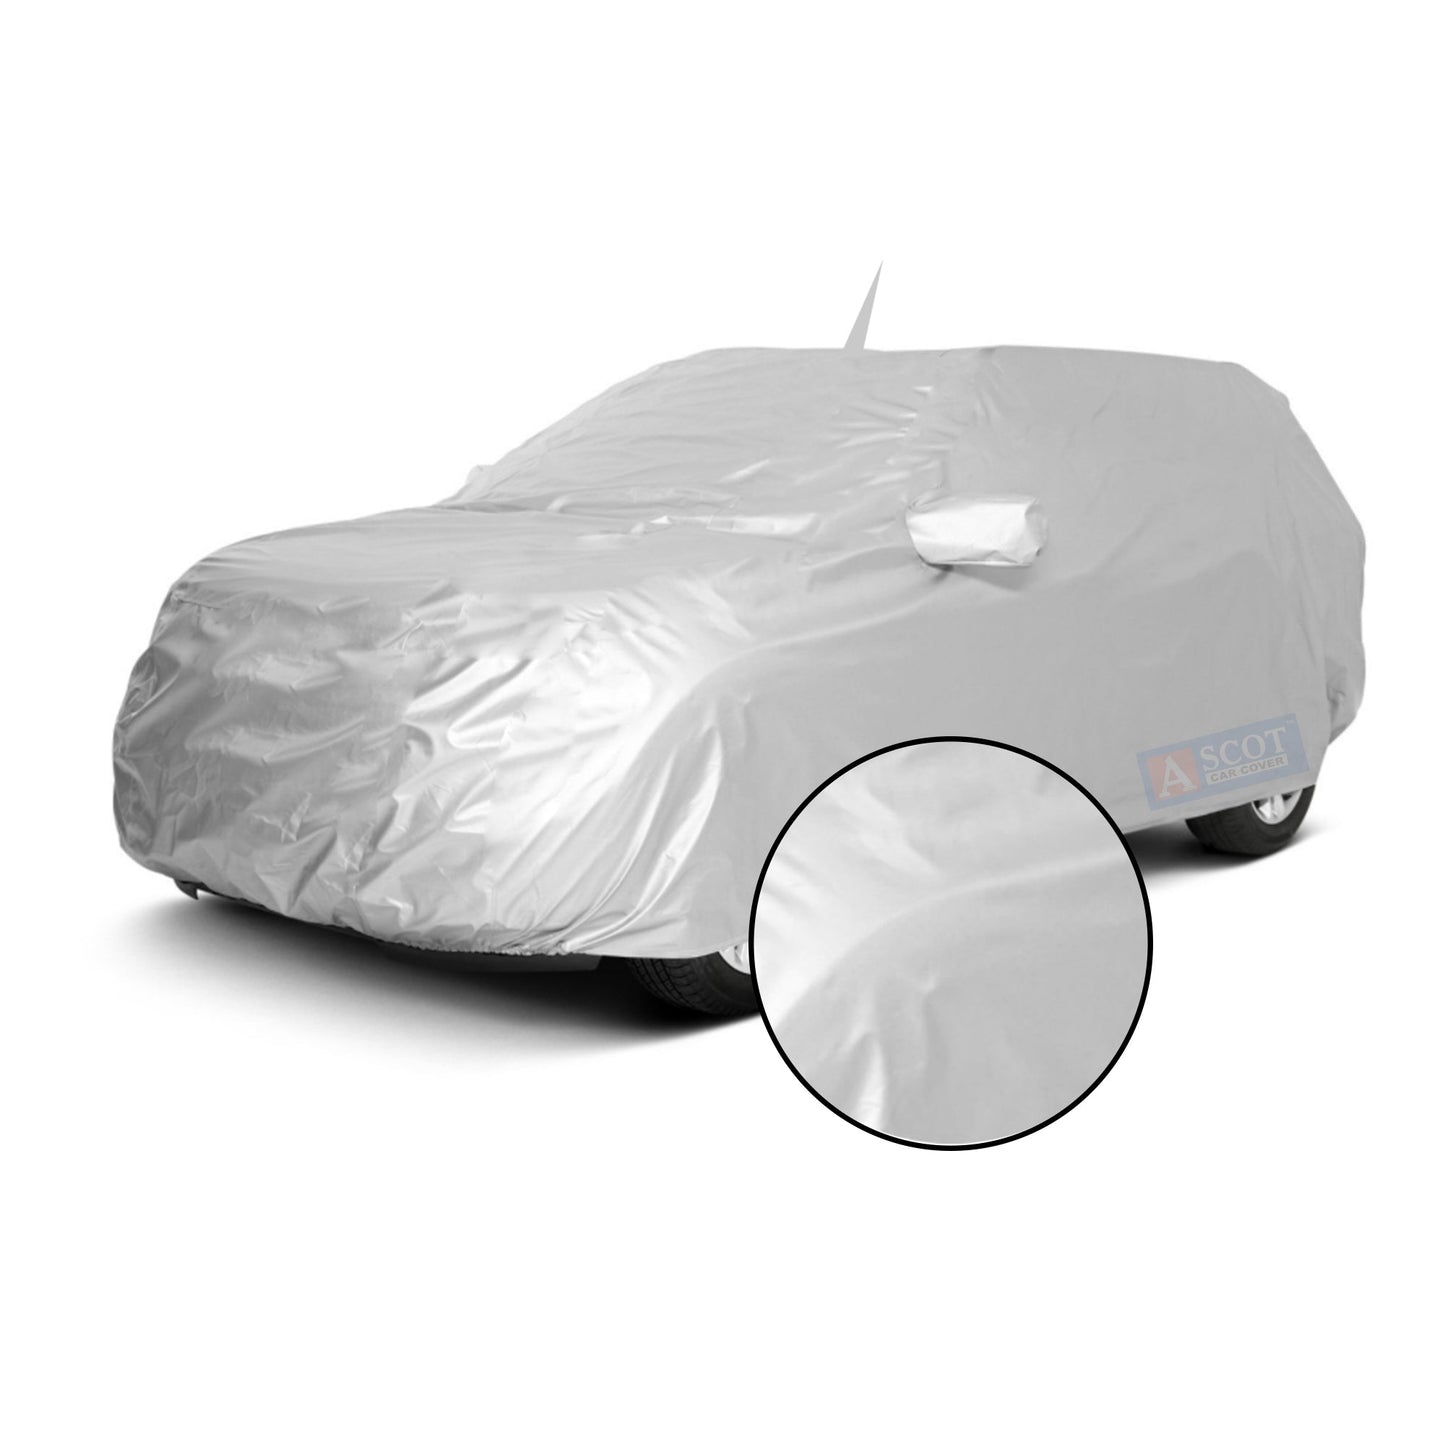 Ascot Maruti Suzuki Nexa Baleno 2015-2023 Model Car Body Cover Dust Proof, Trippel Stitched